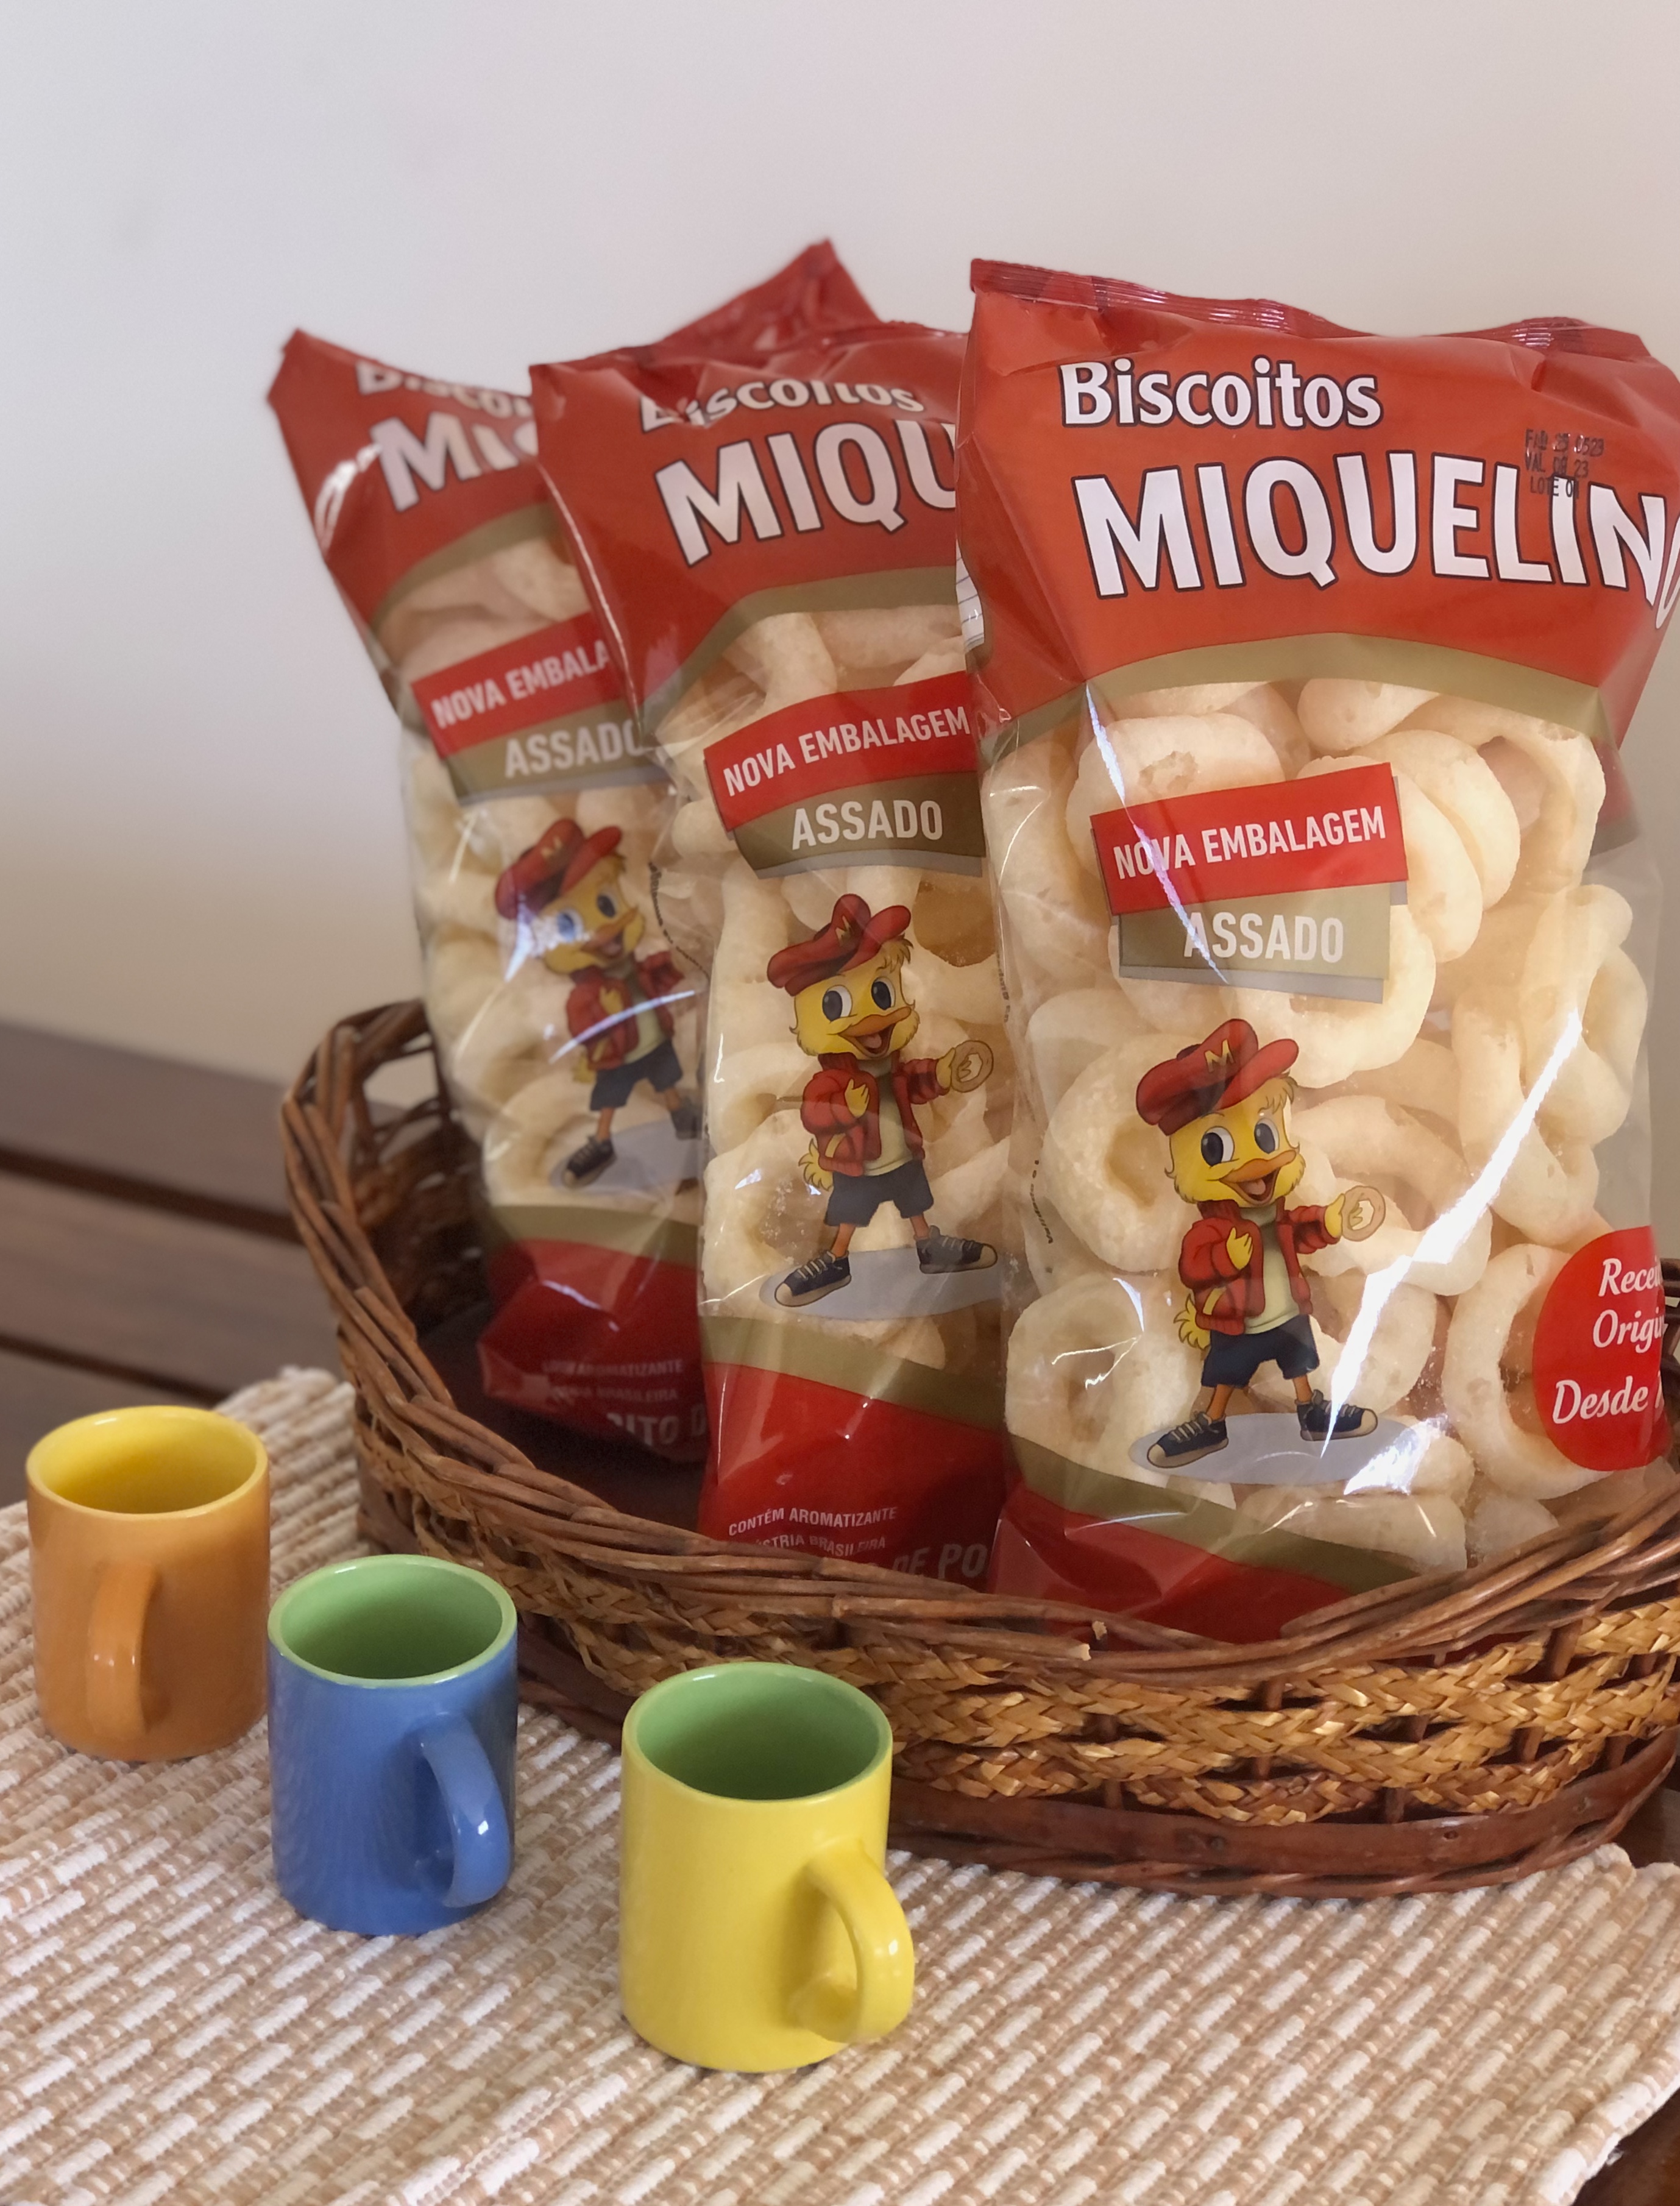 Biscoitos Miquelino